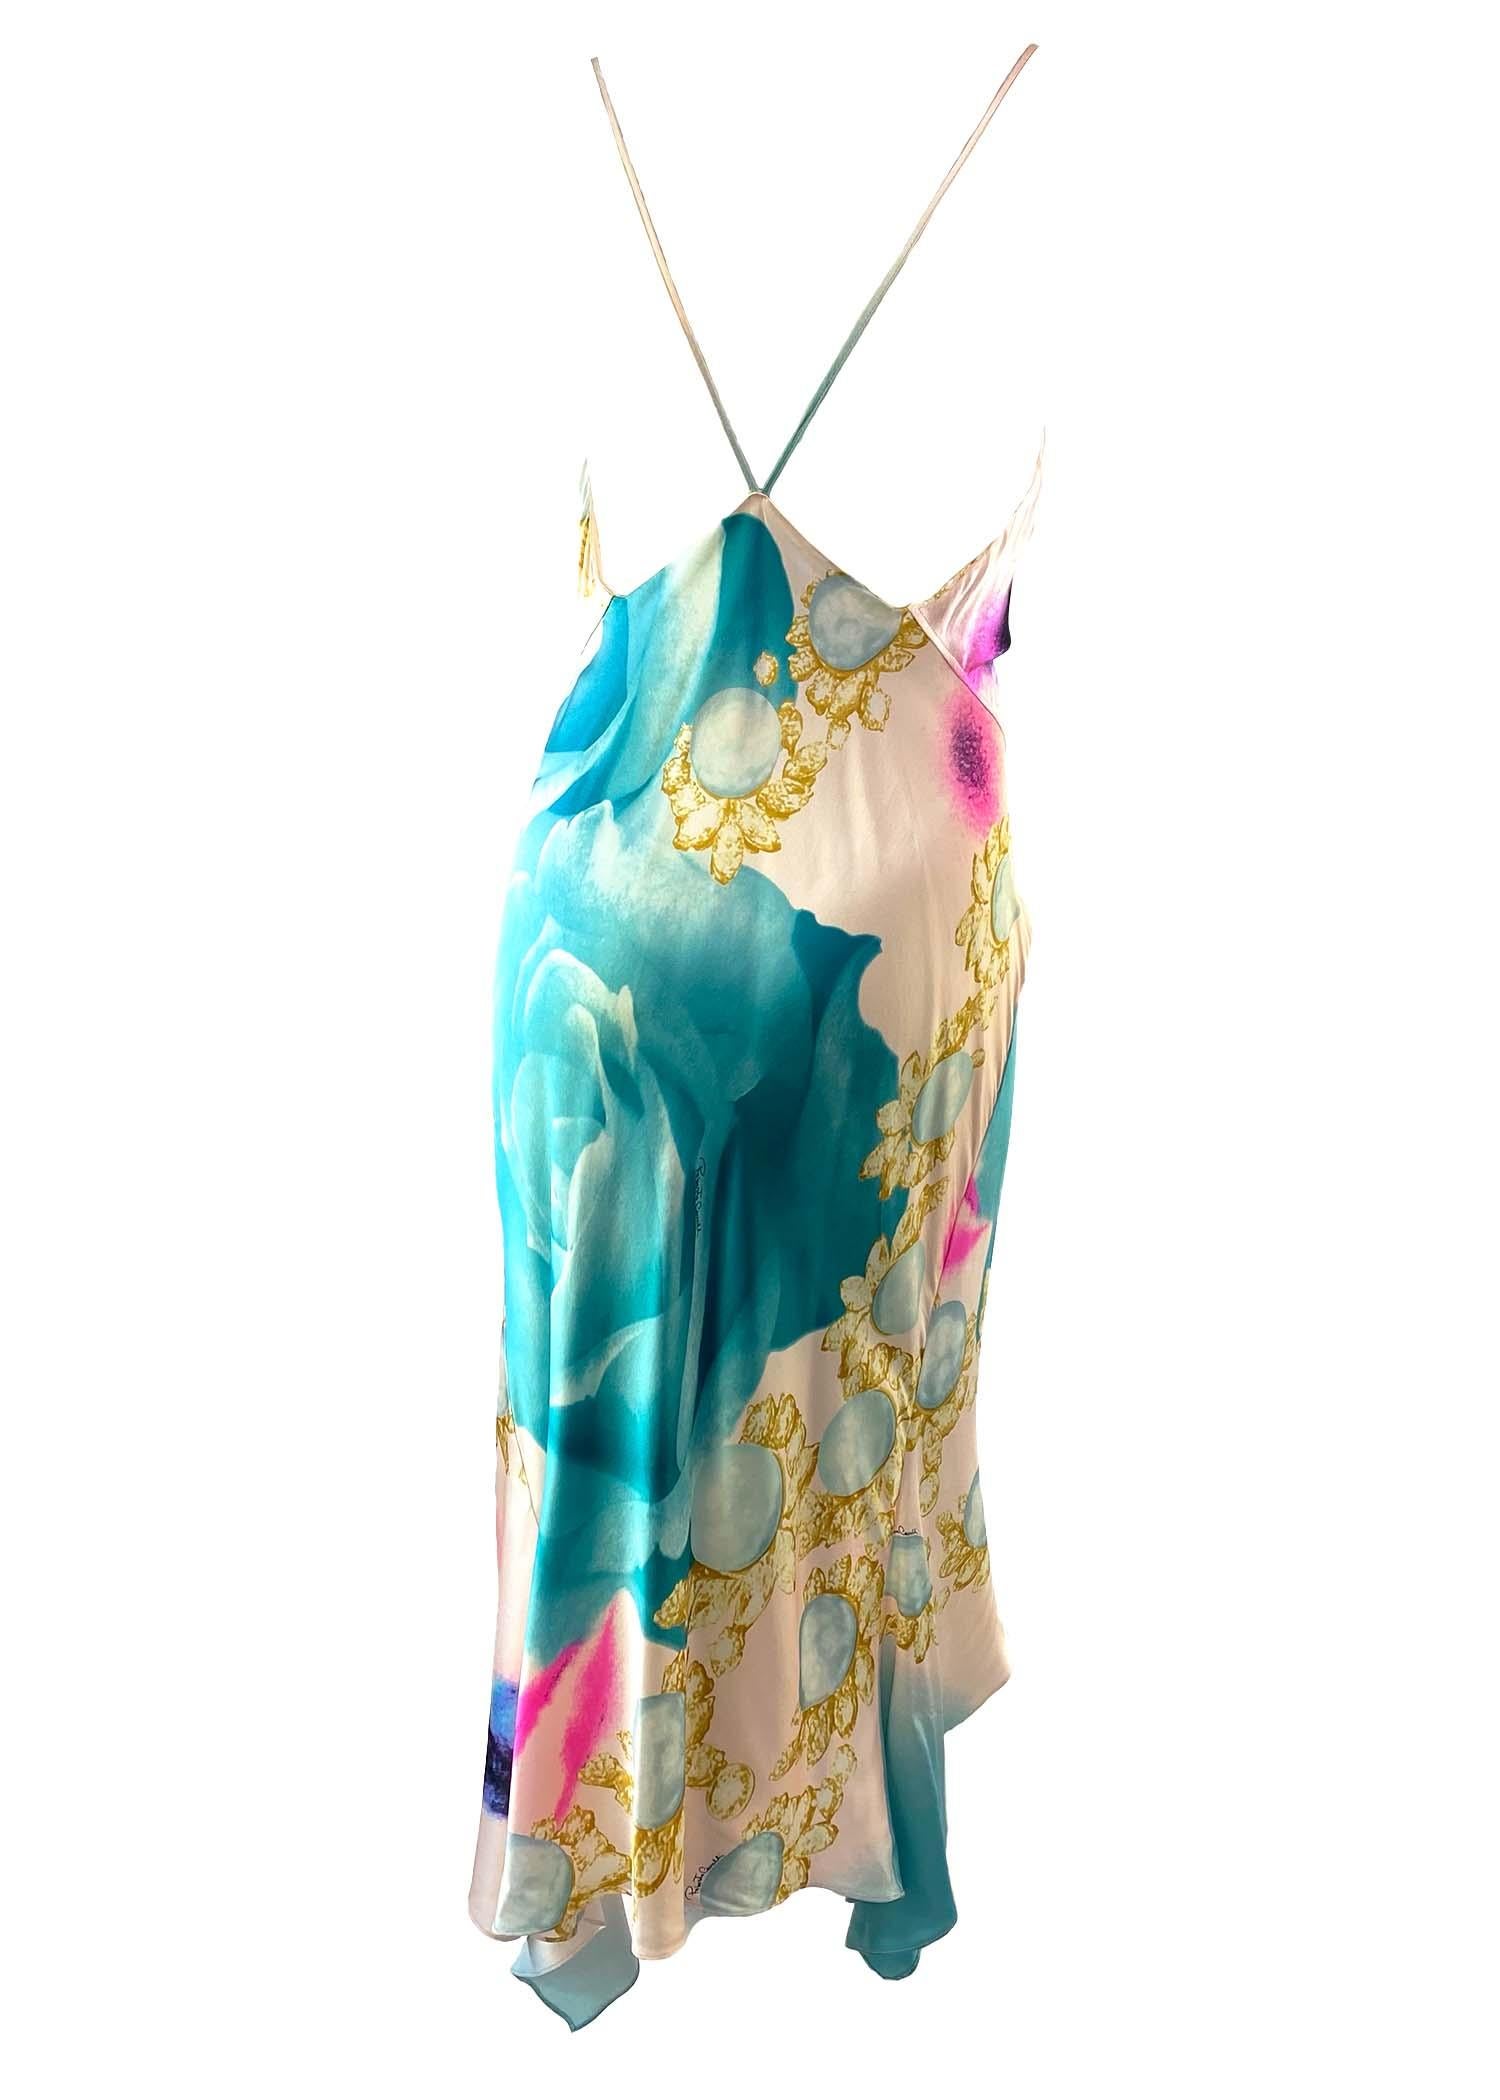 Women's S/S 2001 Roberto Cavalli Liz Taylor Print Silk Dress For Sale